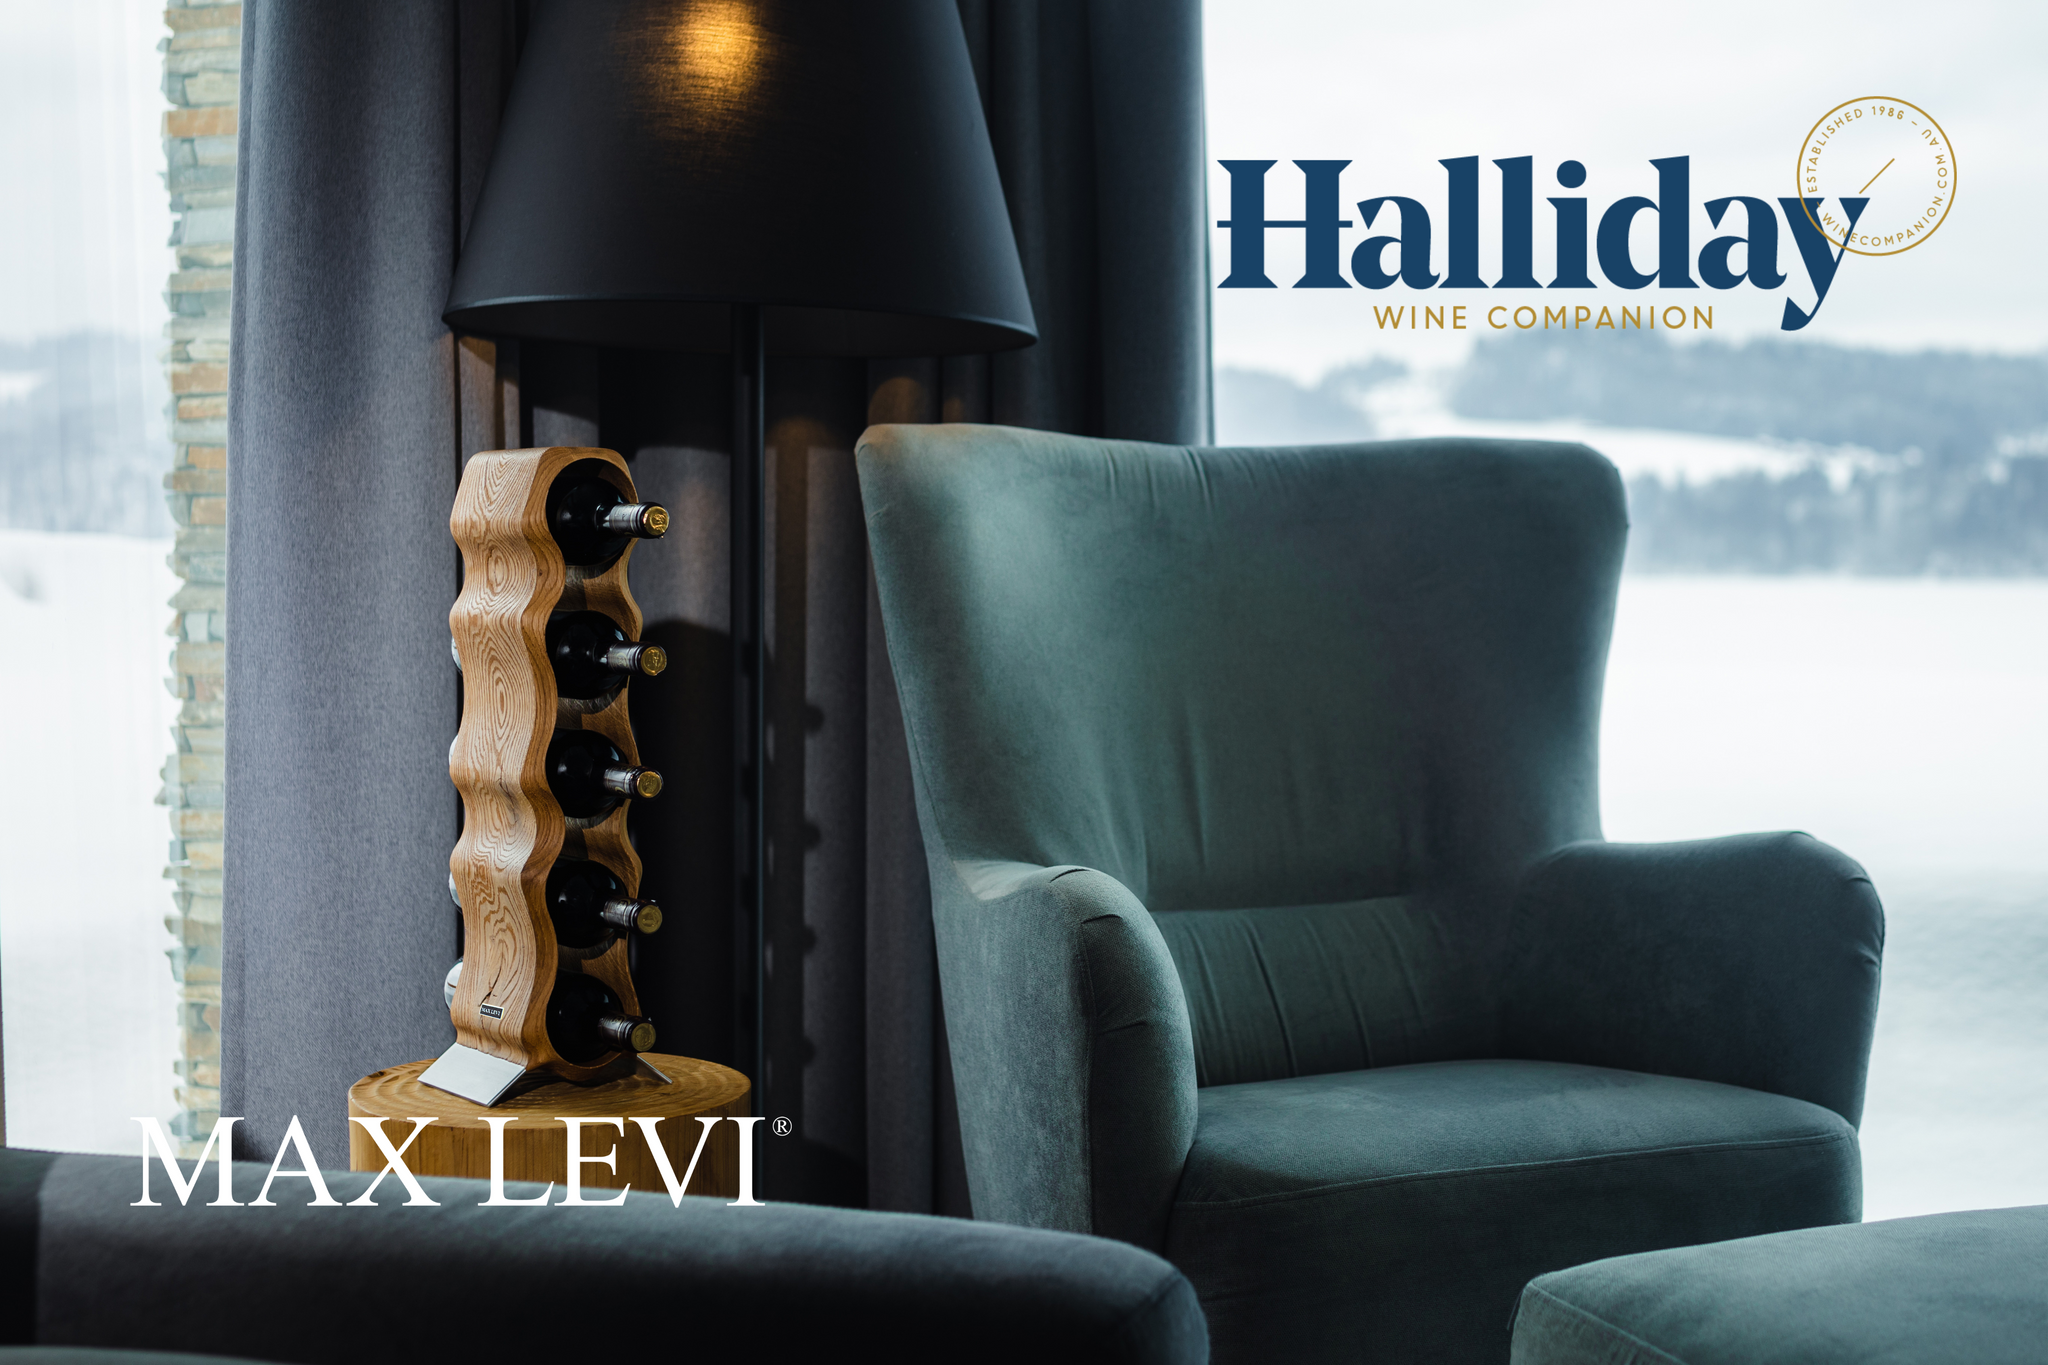 Halliday wine companion - Max Levi 